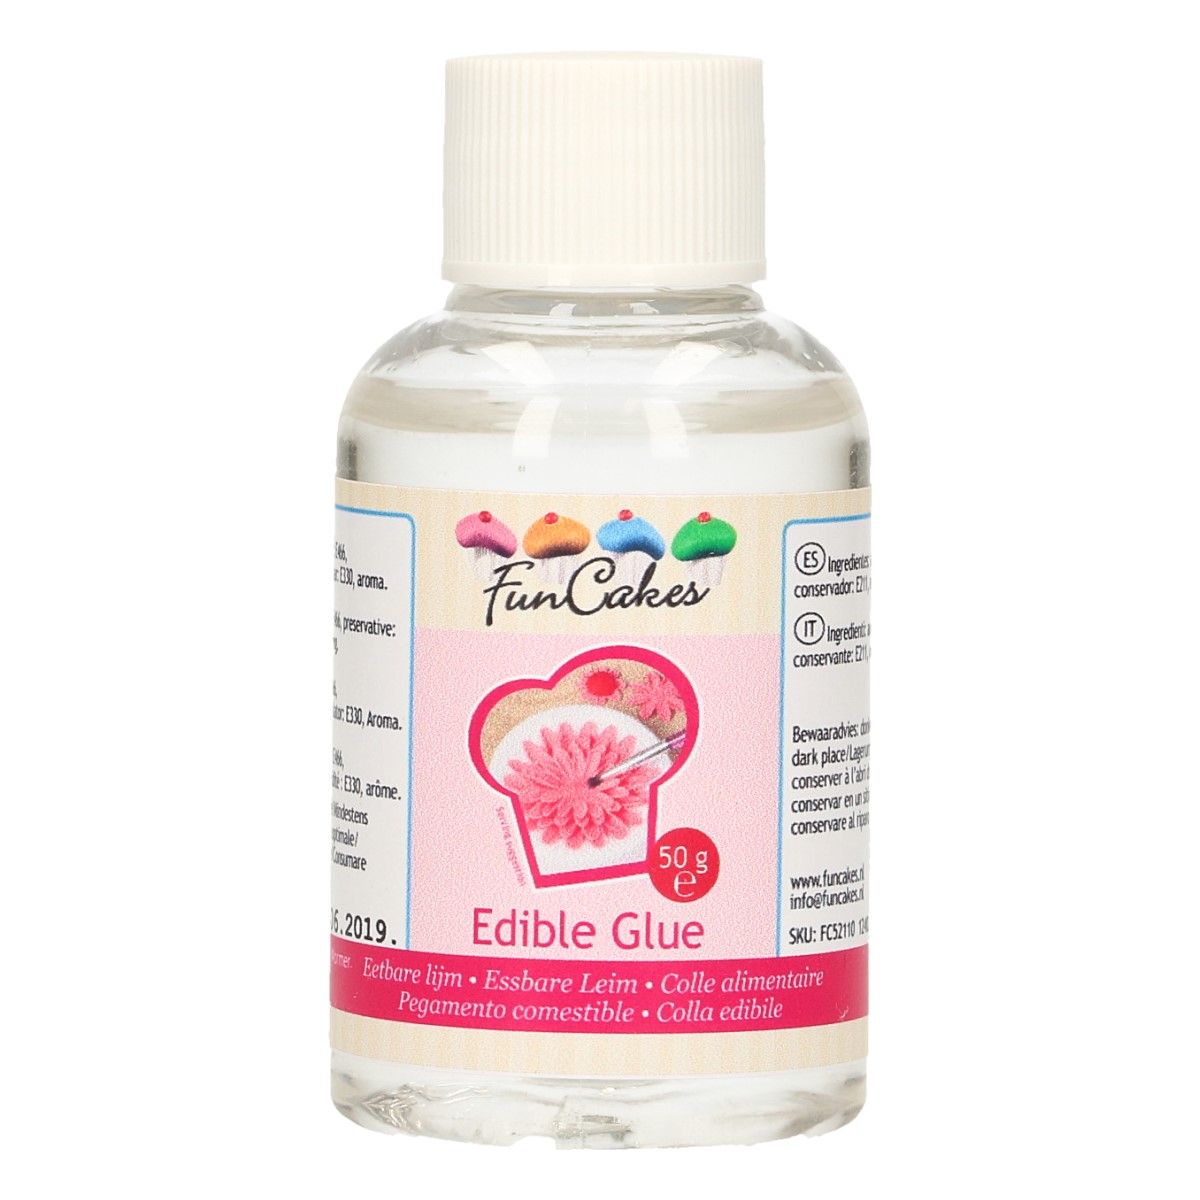 FunCakes Edible Glue - 50 g